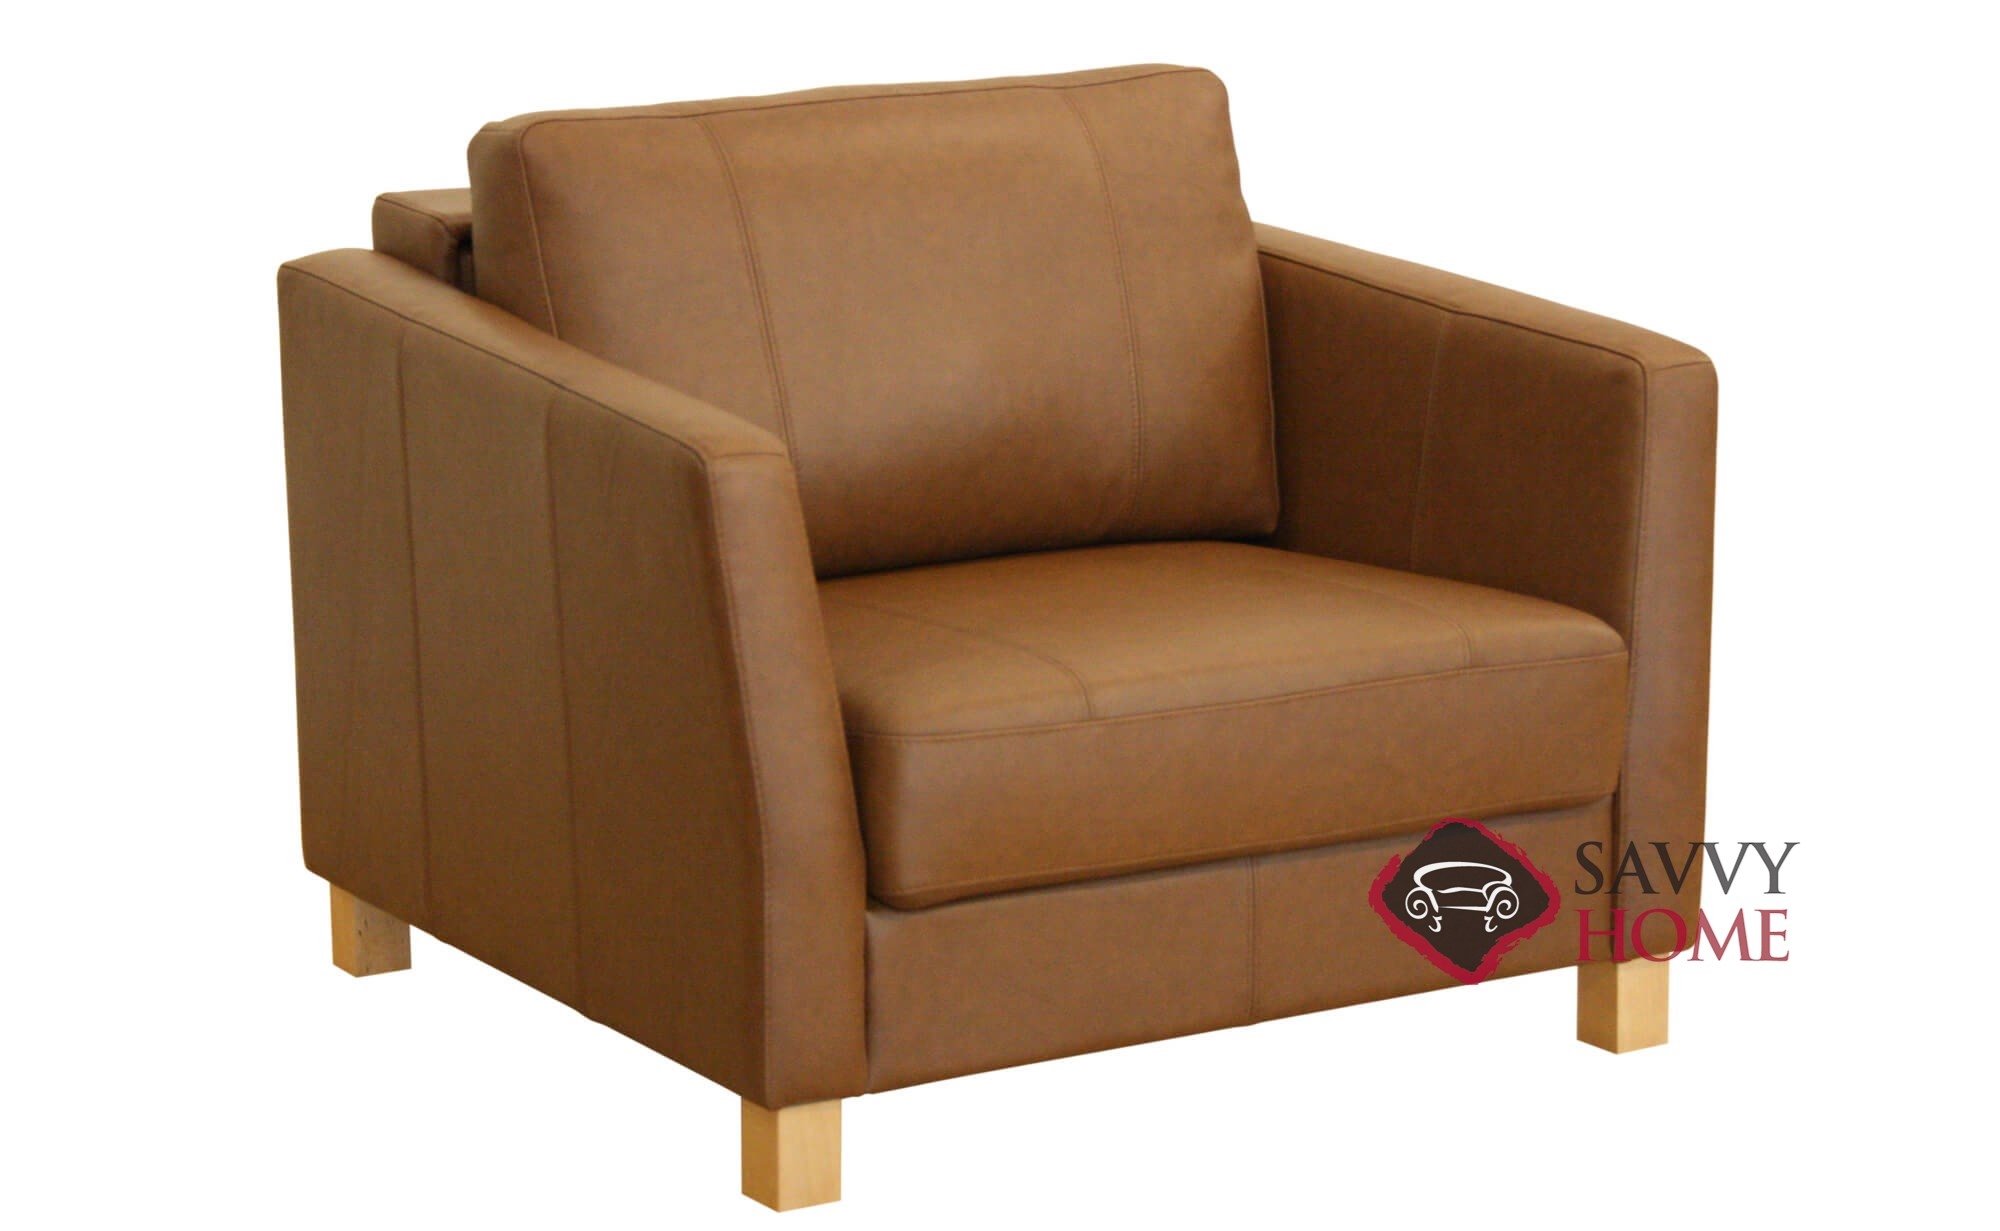 Luonto Leather Sleeper Sofas Chair, Leather Chair Sleeper